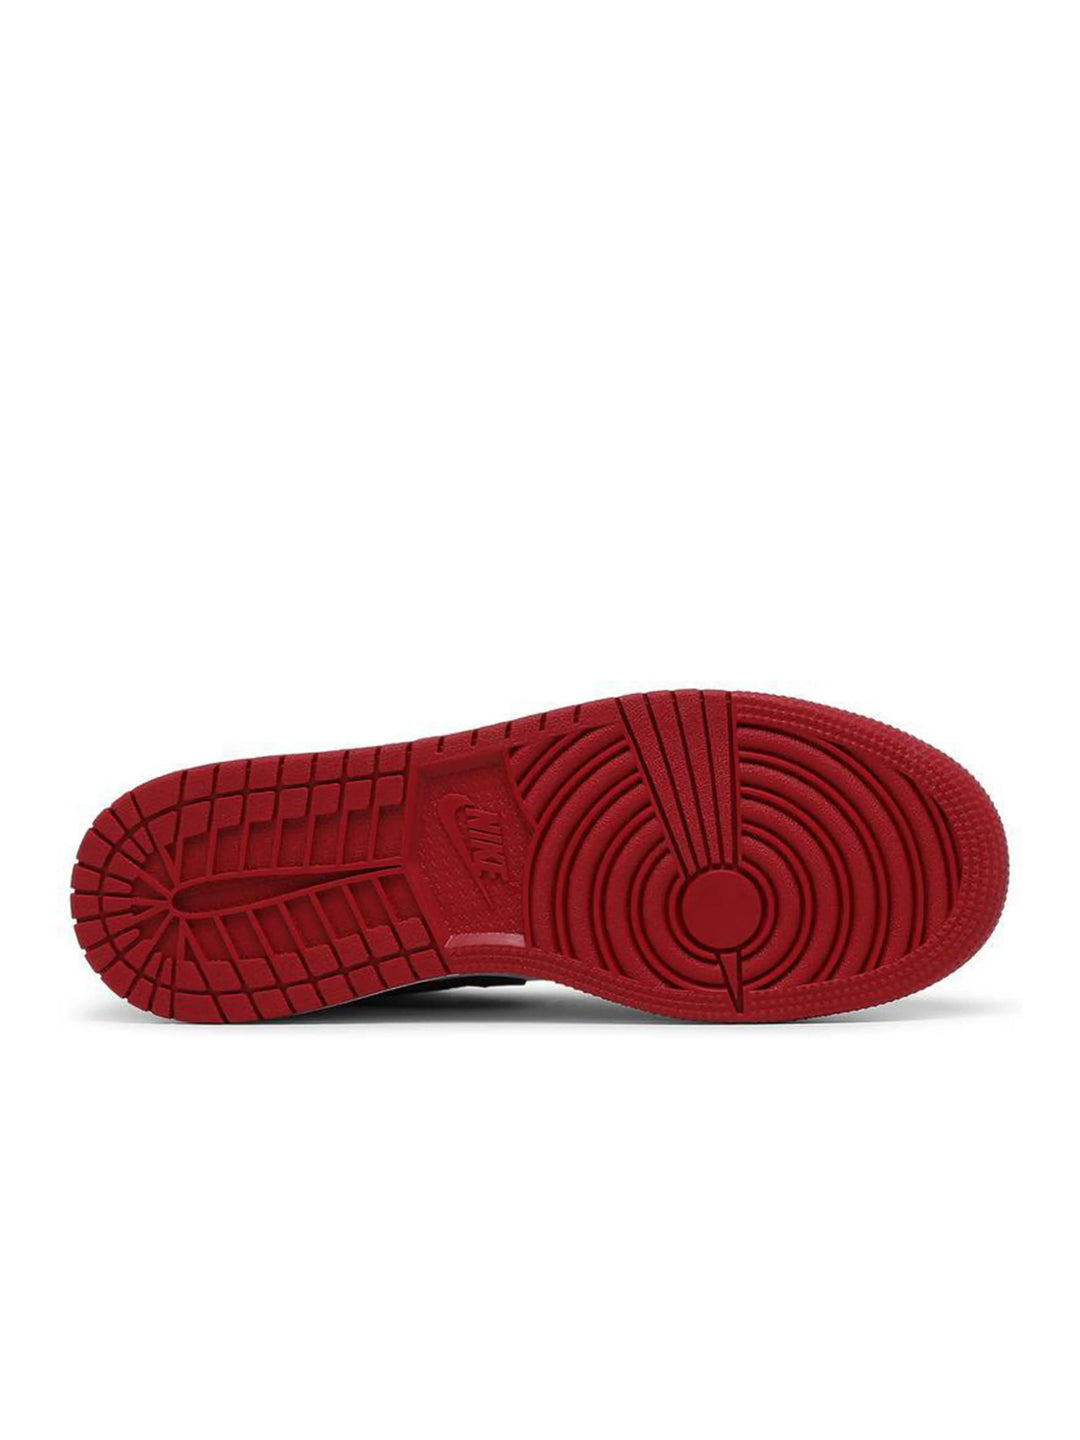 Nike Air Jordan 1 Low White Gym Red (GS) Prior